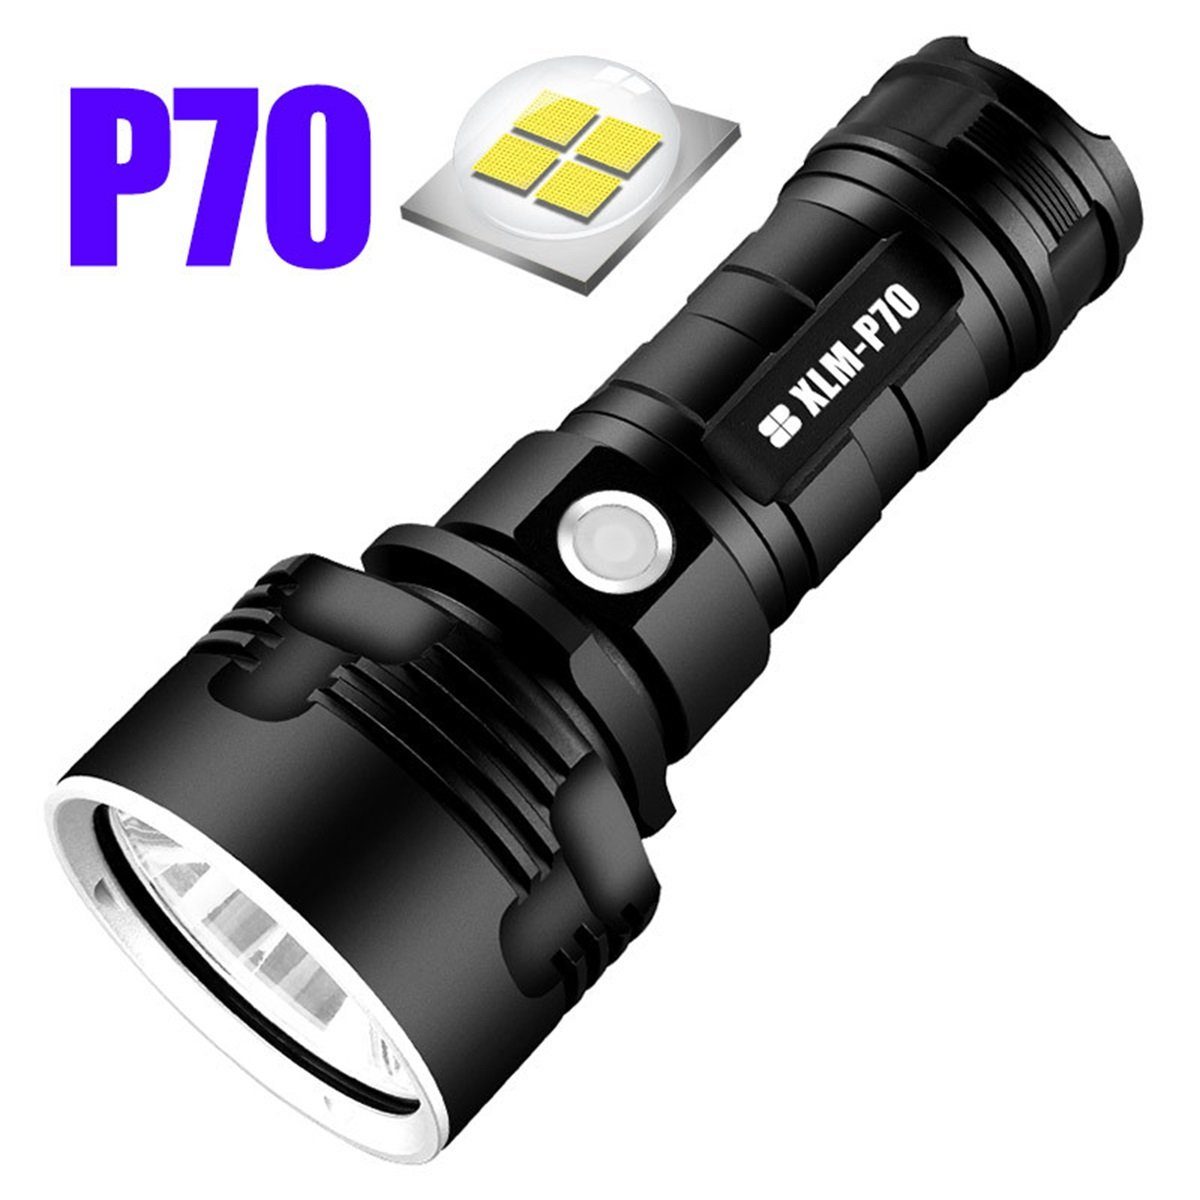 DOPWii Taschenlampe 55W LED Blendung Taschenlampe,Zoombar,2500mAh,IPX4,15.6*5.6cm